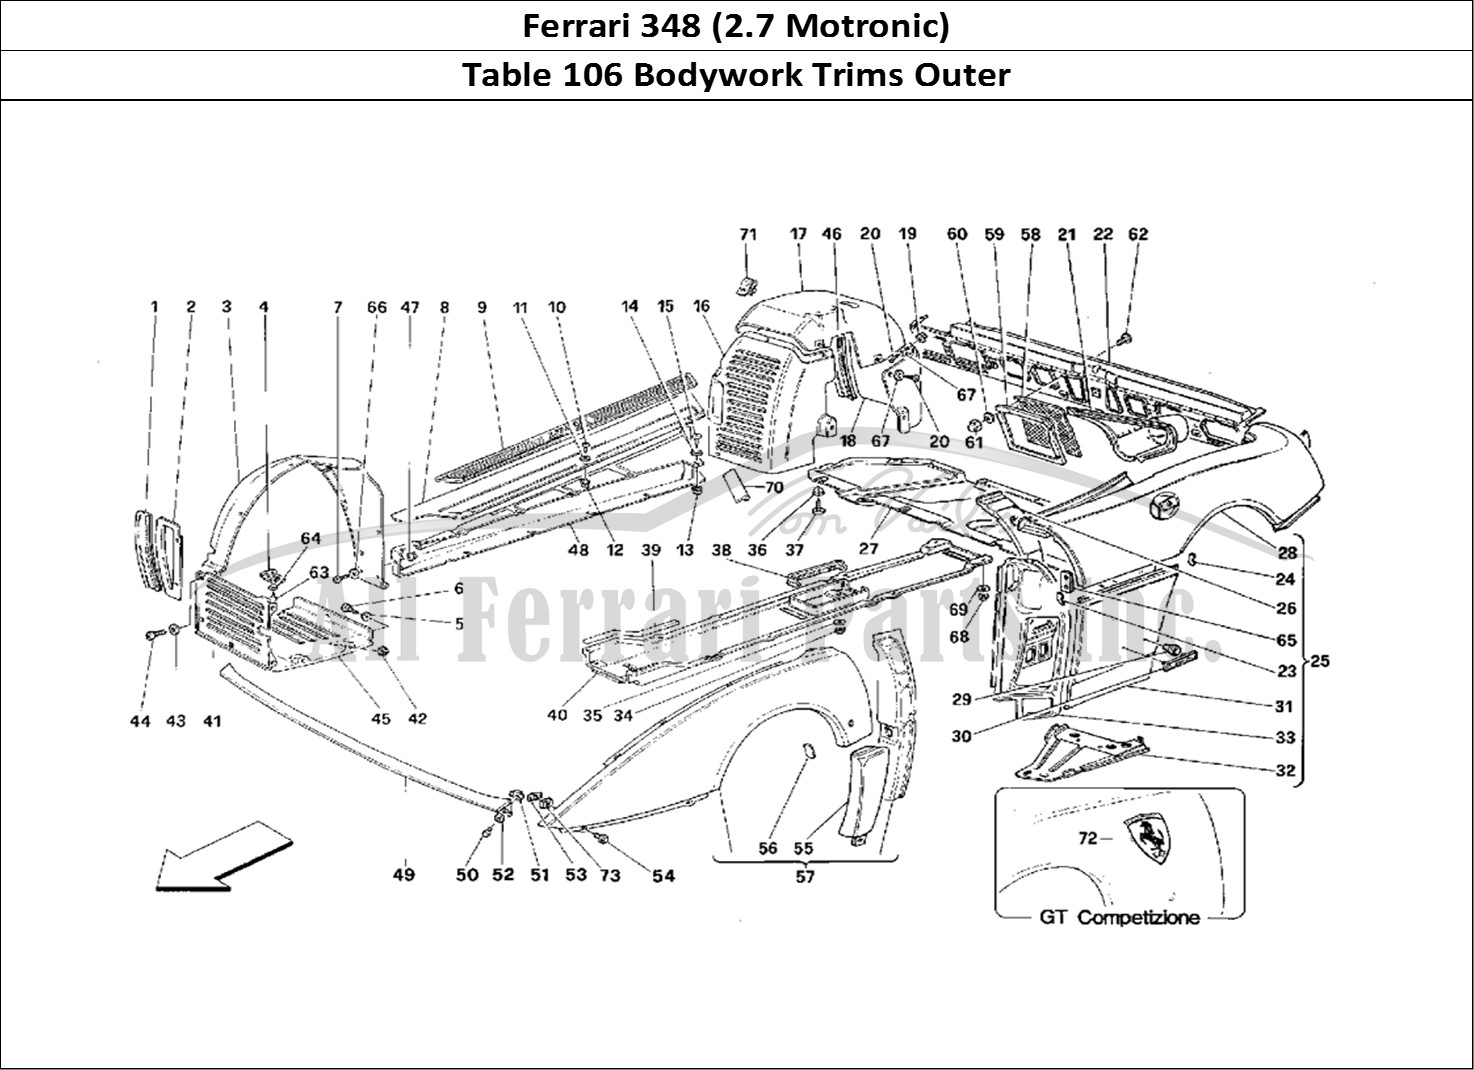 Ferrari Parts Ferrari 348 (2.7 Motronic) Page 106 Body - Outer Trims